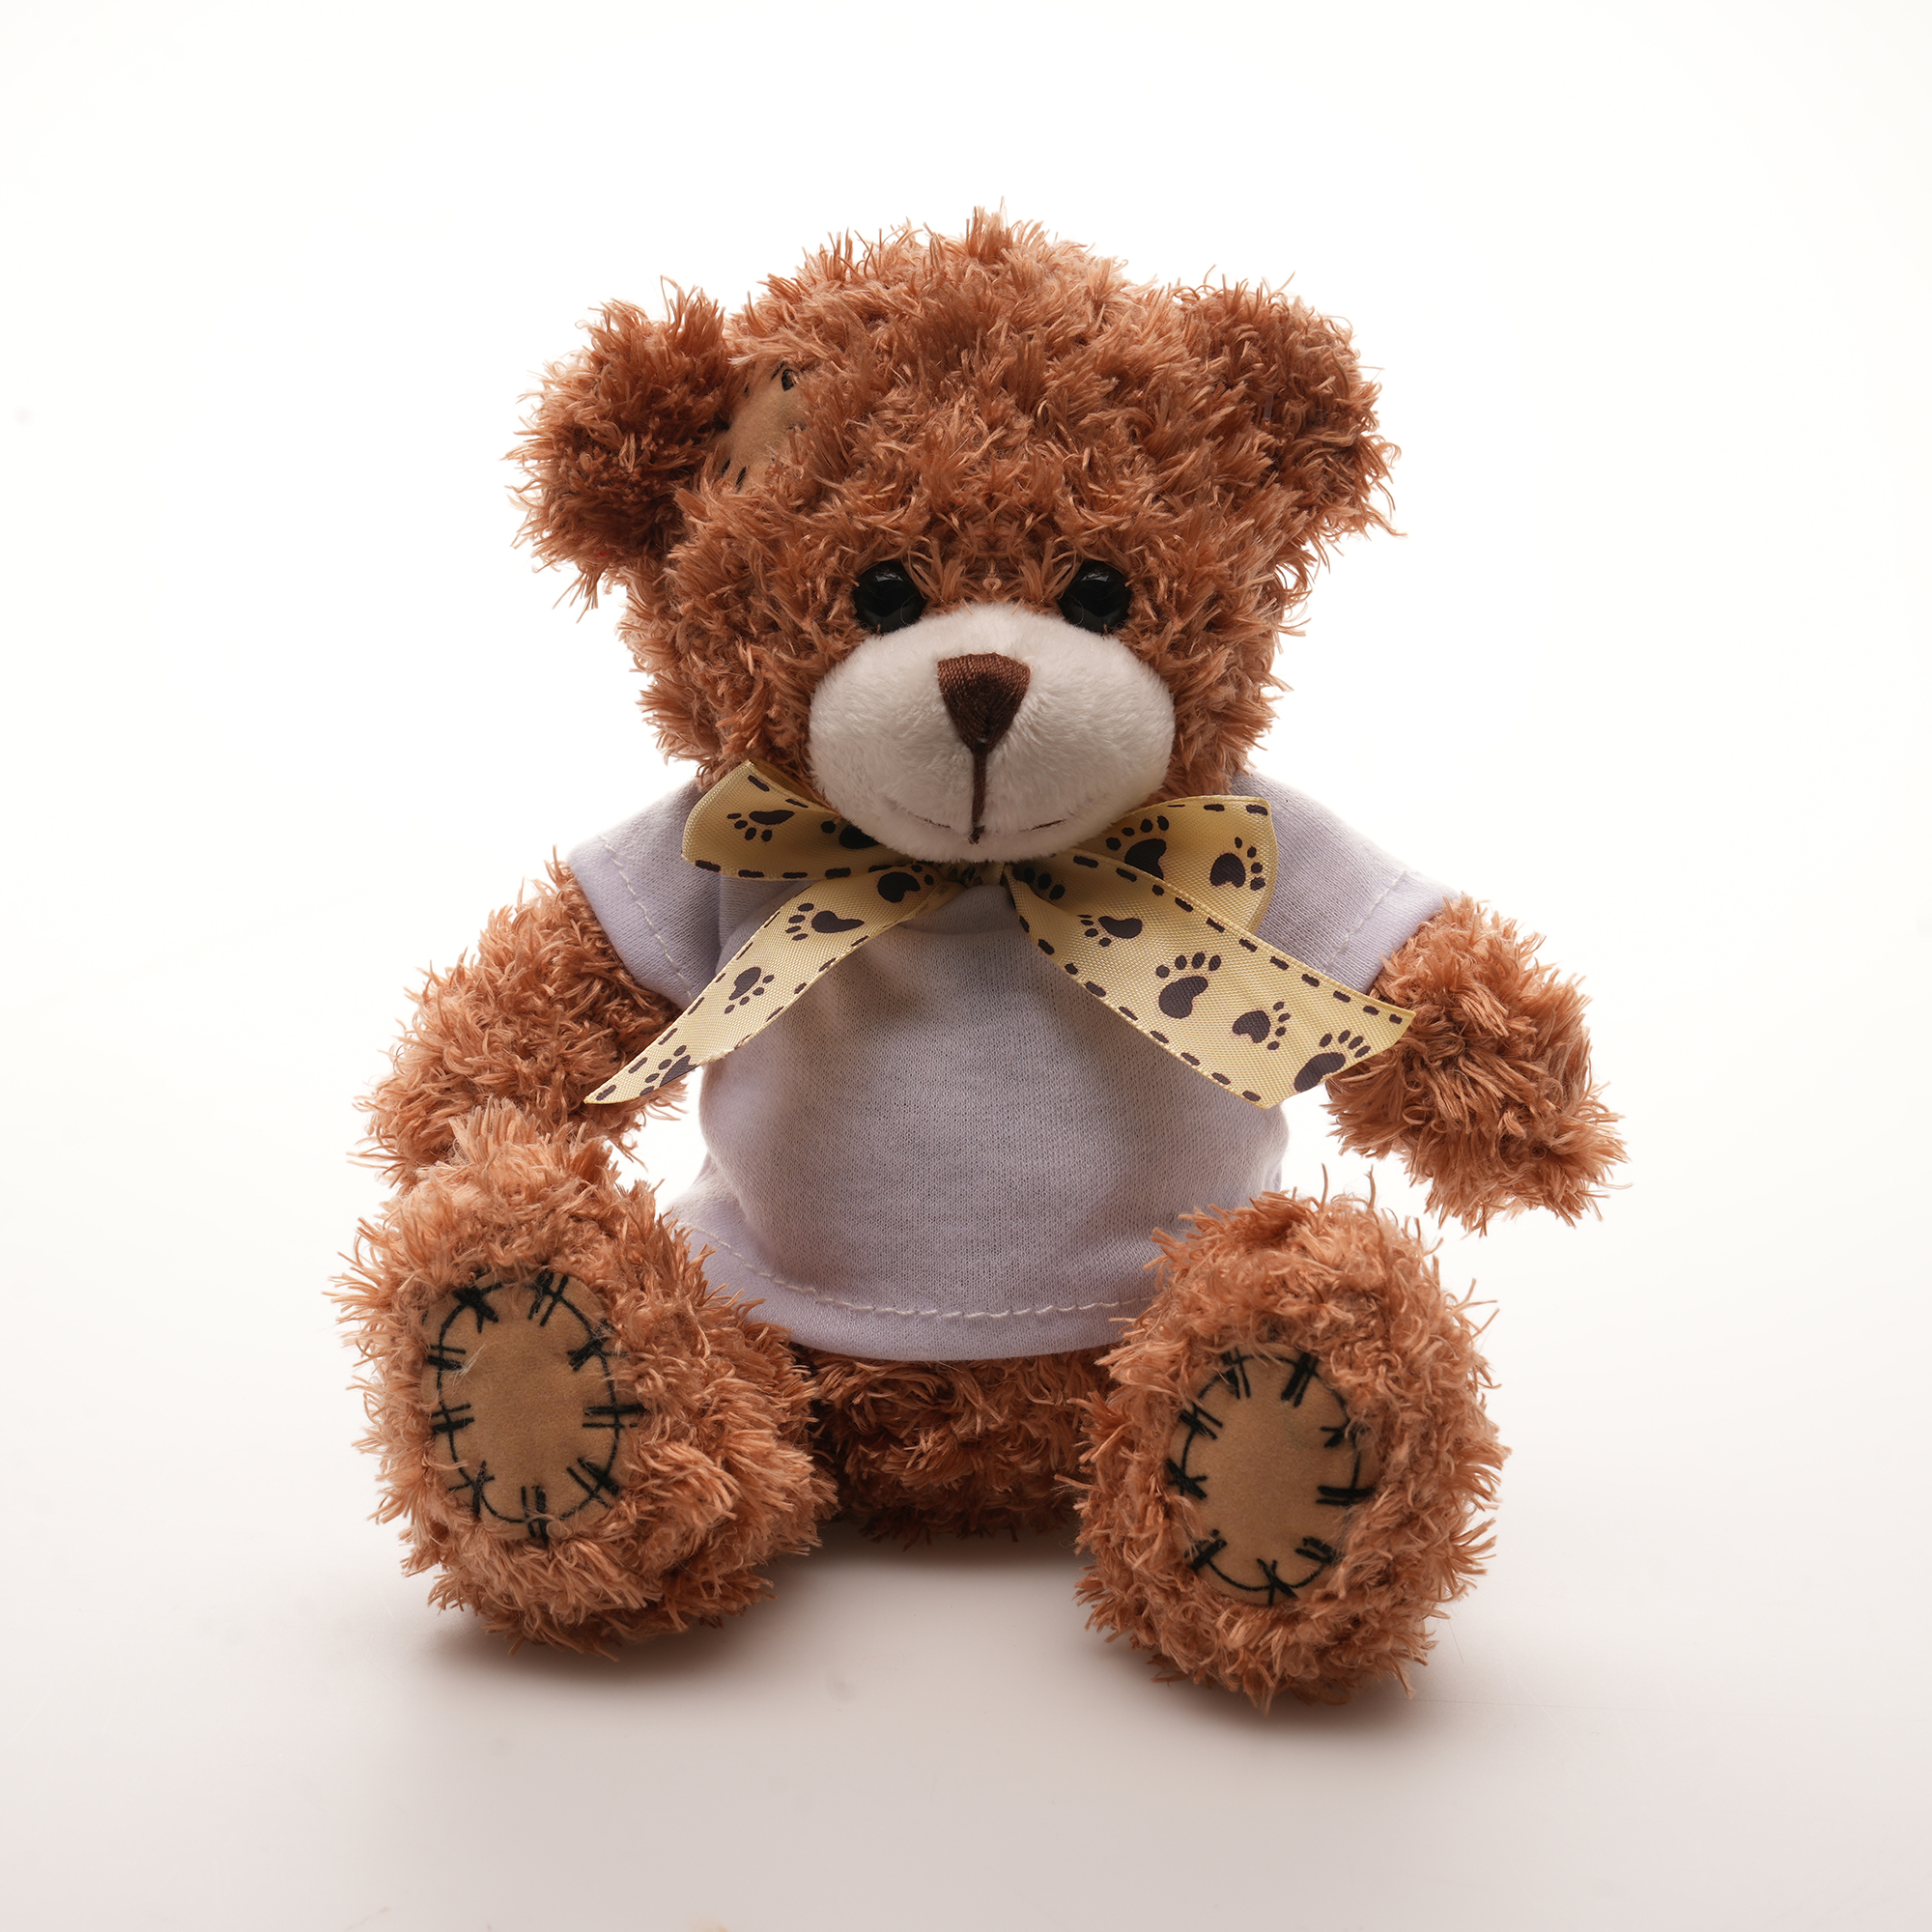 TB0003 2 - Patched Paw 18cm Teddy Bear